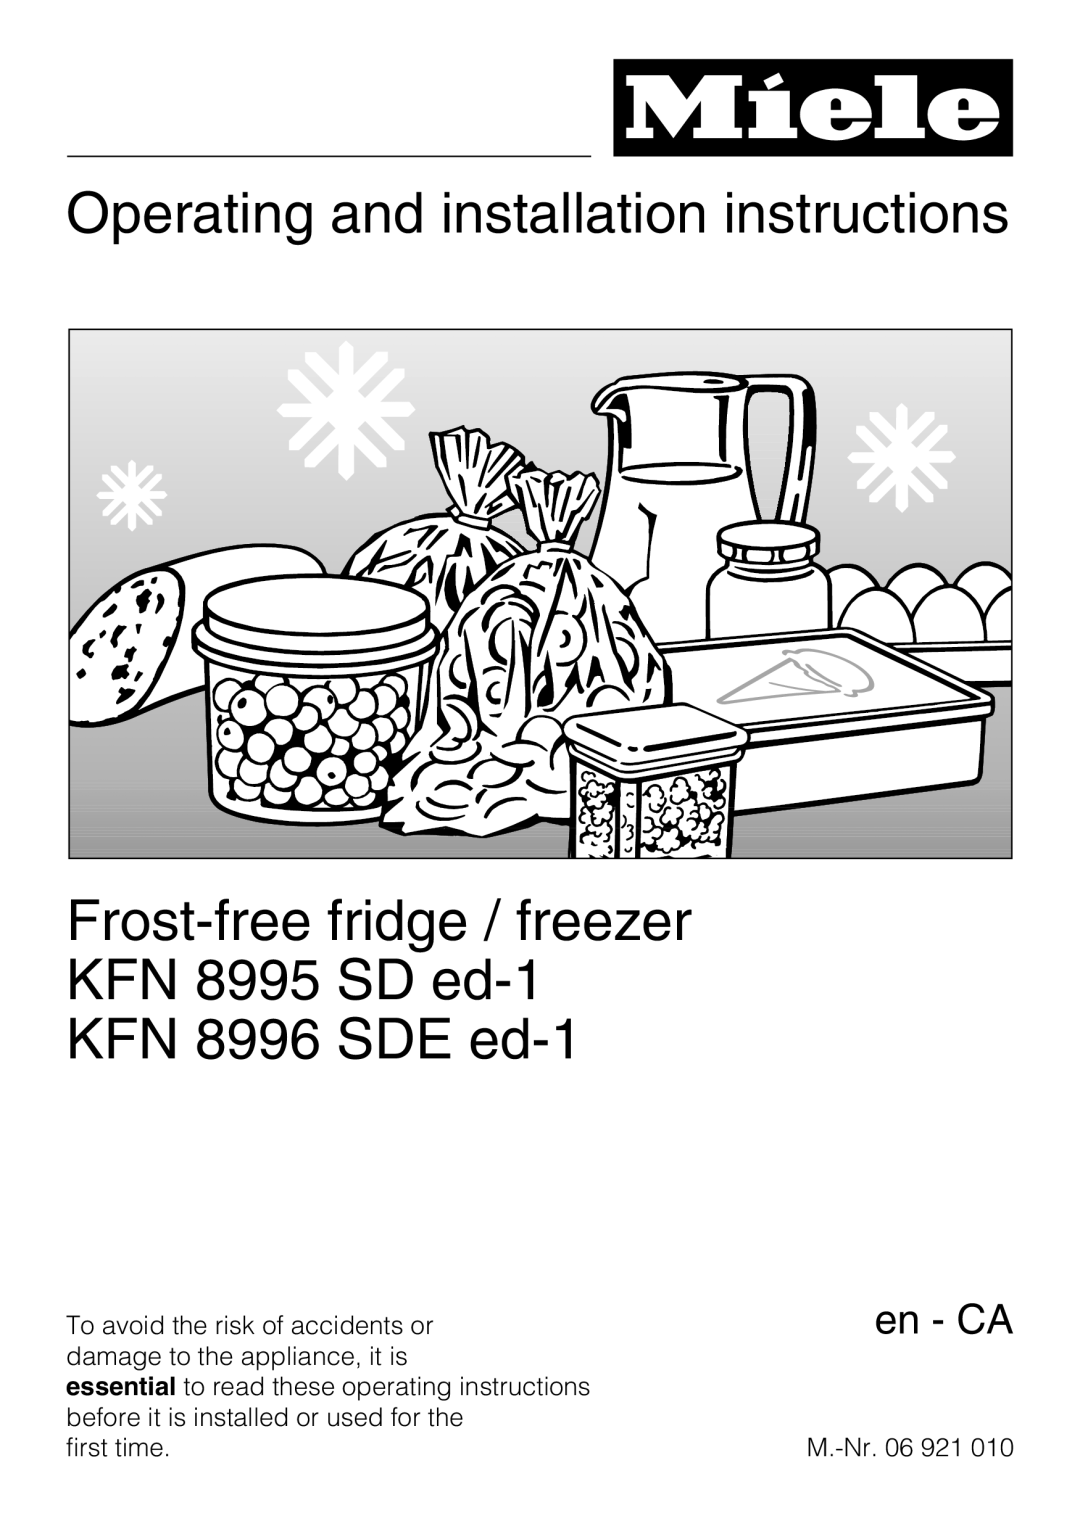 Miele KFN 8996 SDE ED-1 installation instructions Operating and installation instructions Frost-free fridge / freezer 